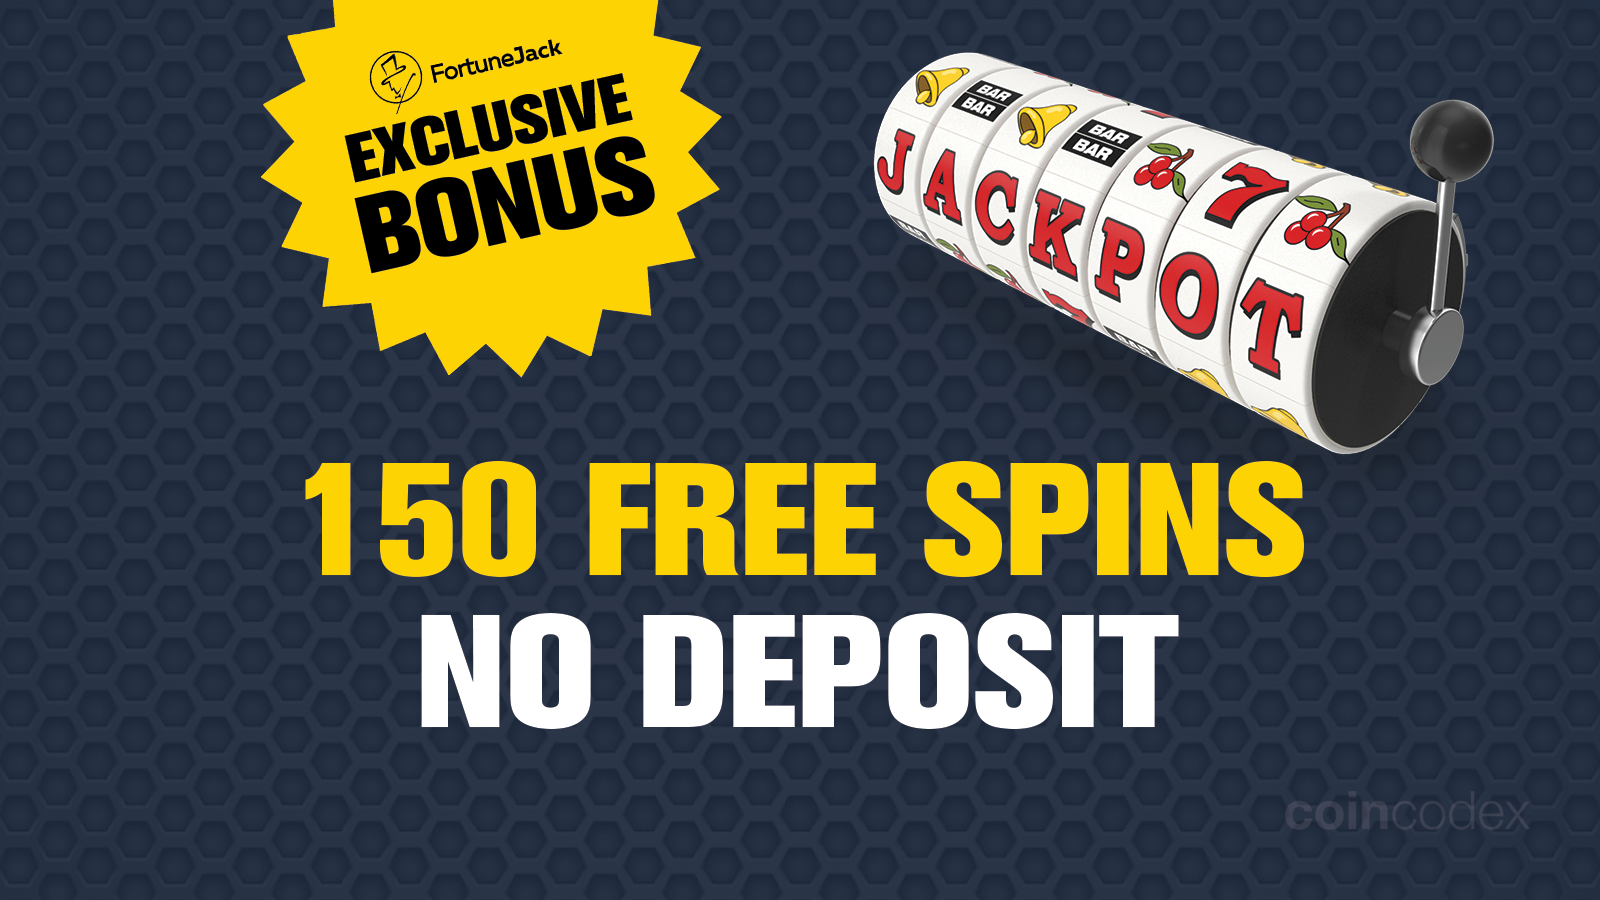 FortuneJack Casino No Deposit Bonus - Get Your Free Spins